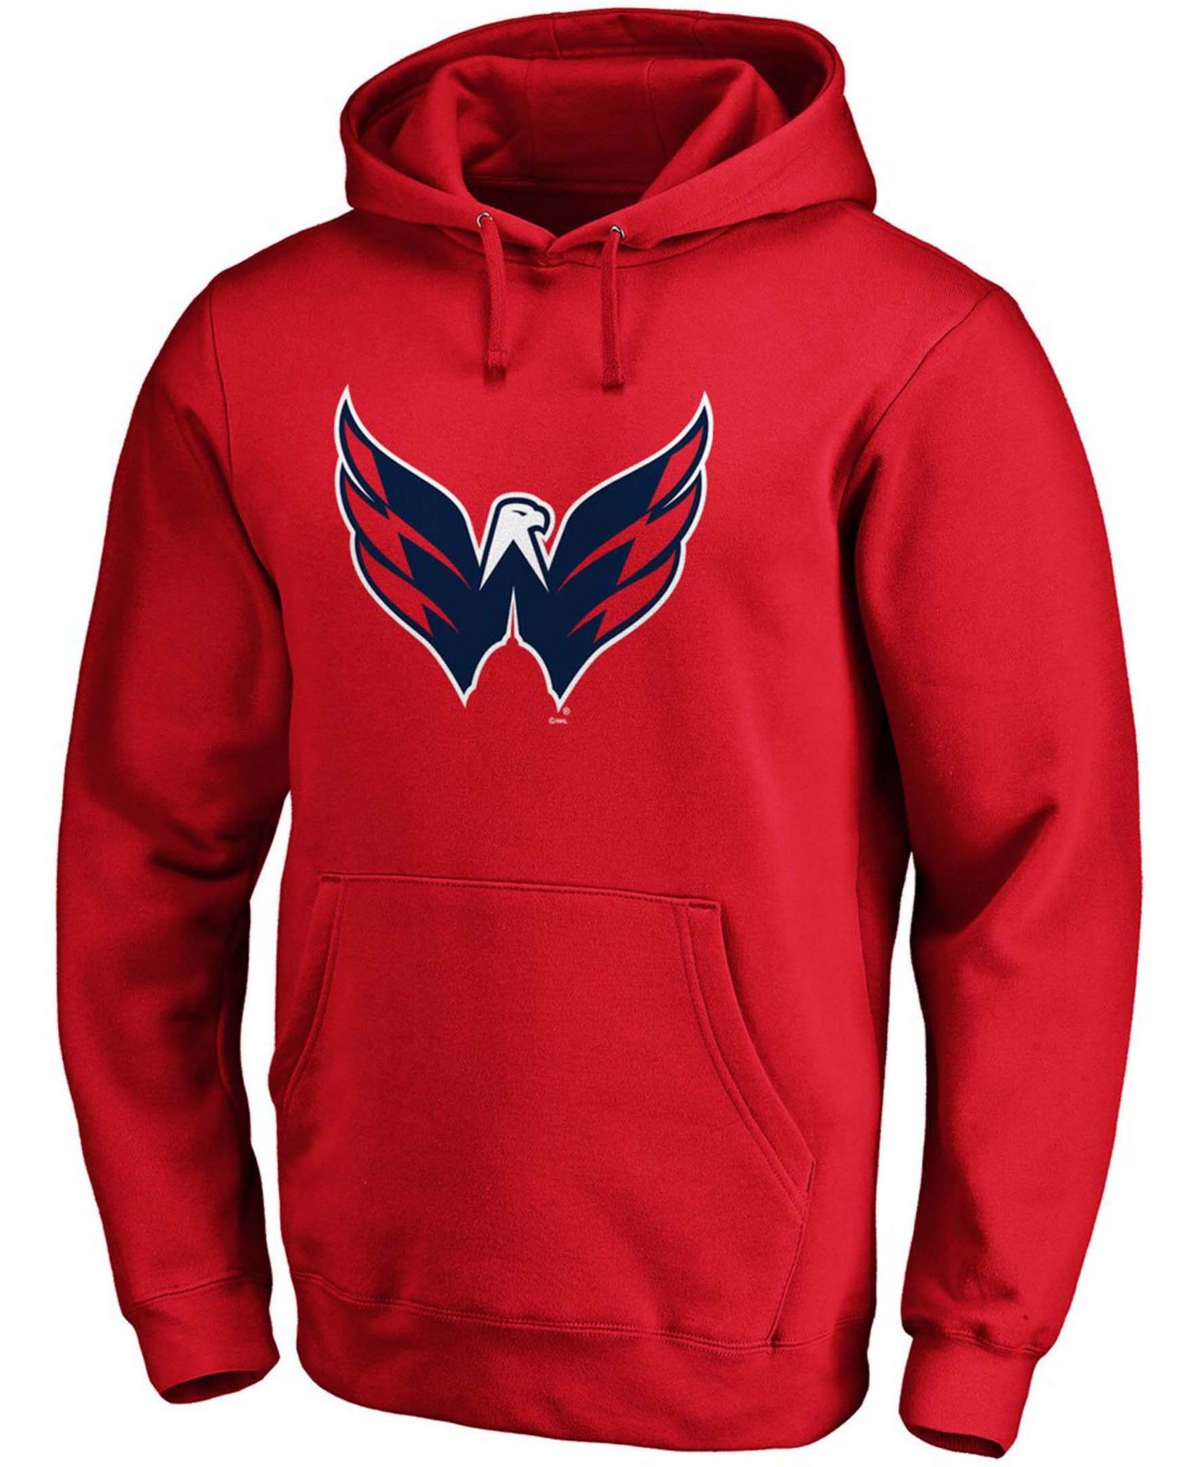 Shop Fanatics Men's Red Washington Capitals Primary Logo Pullover Hoodie